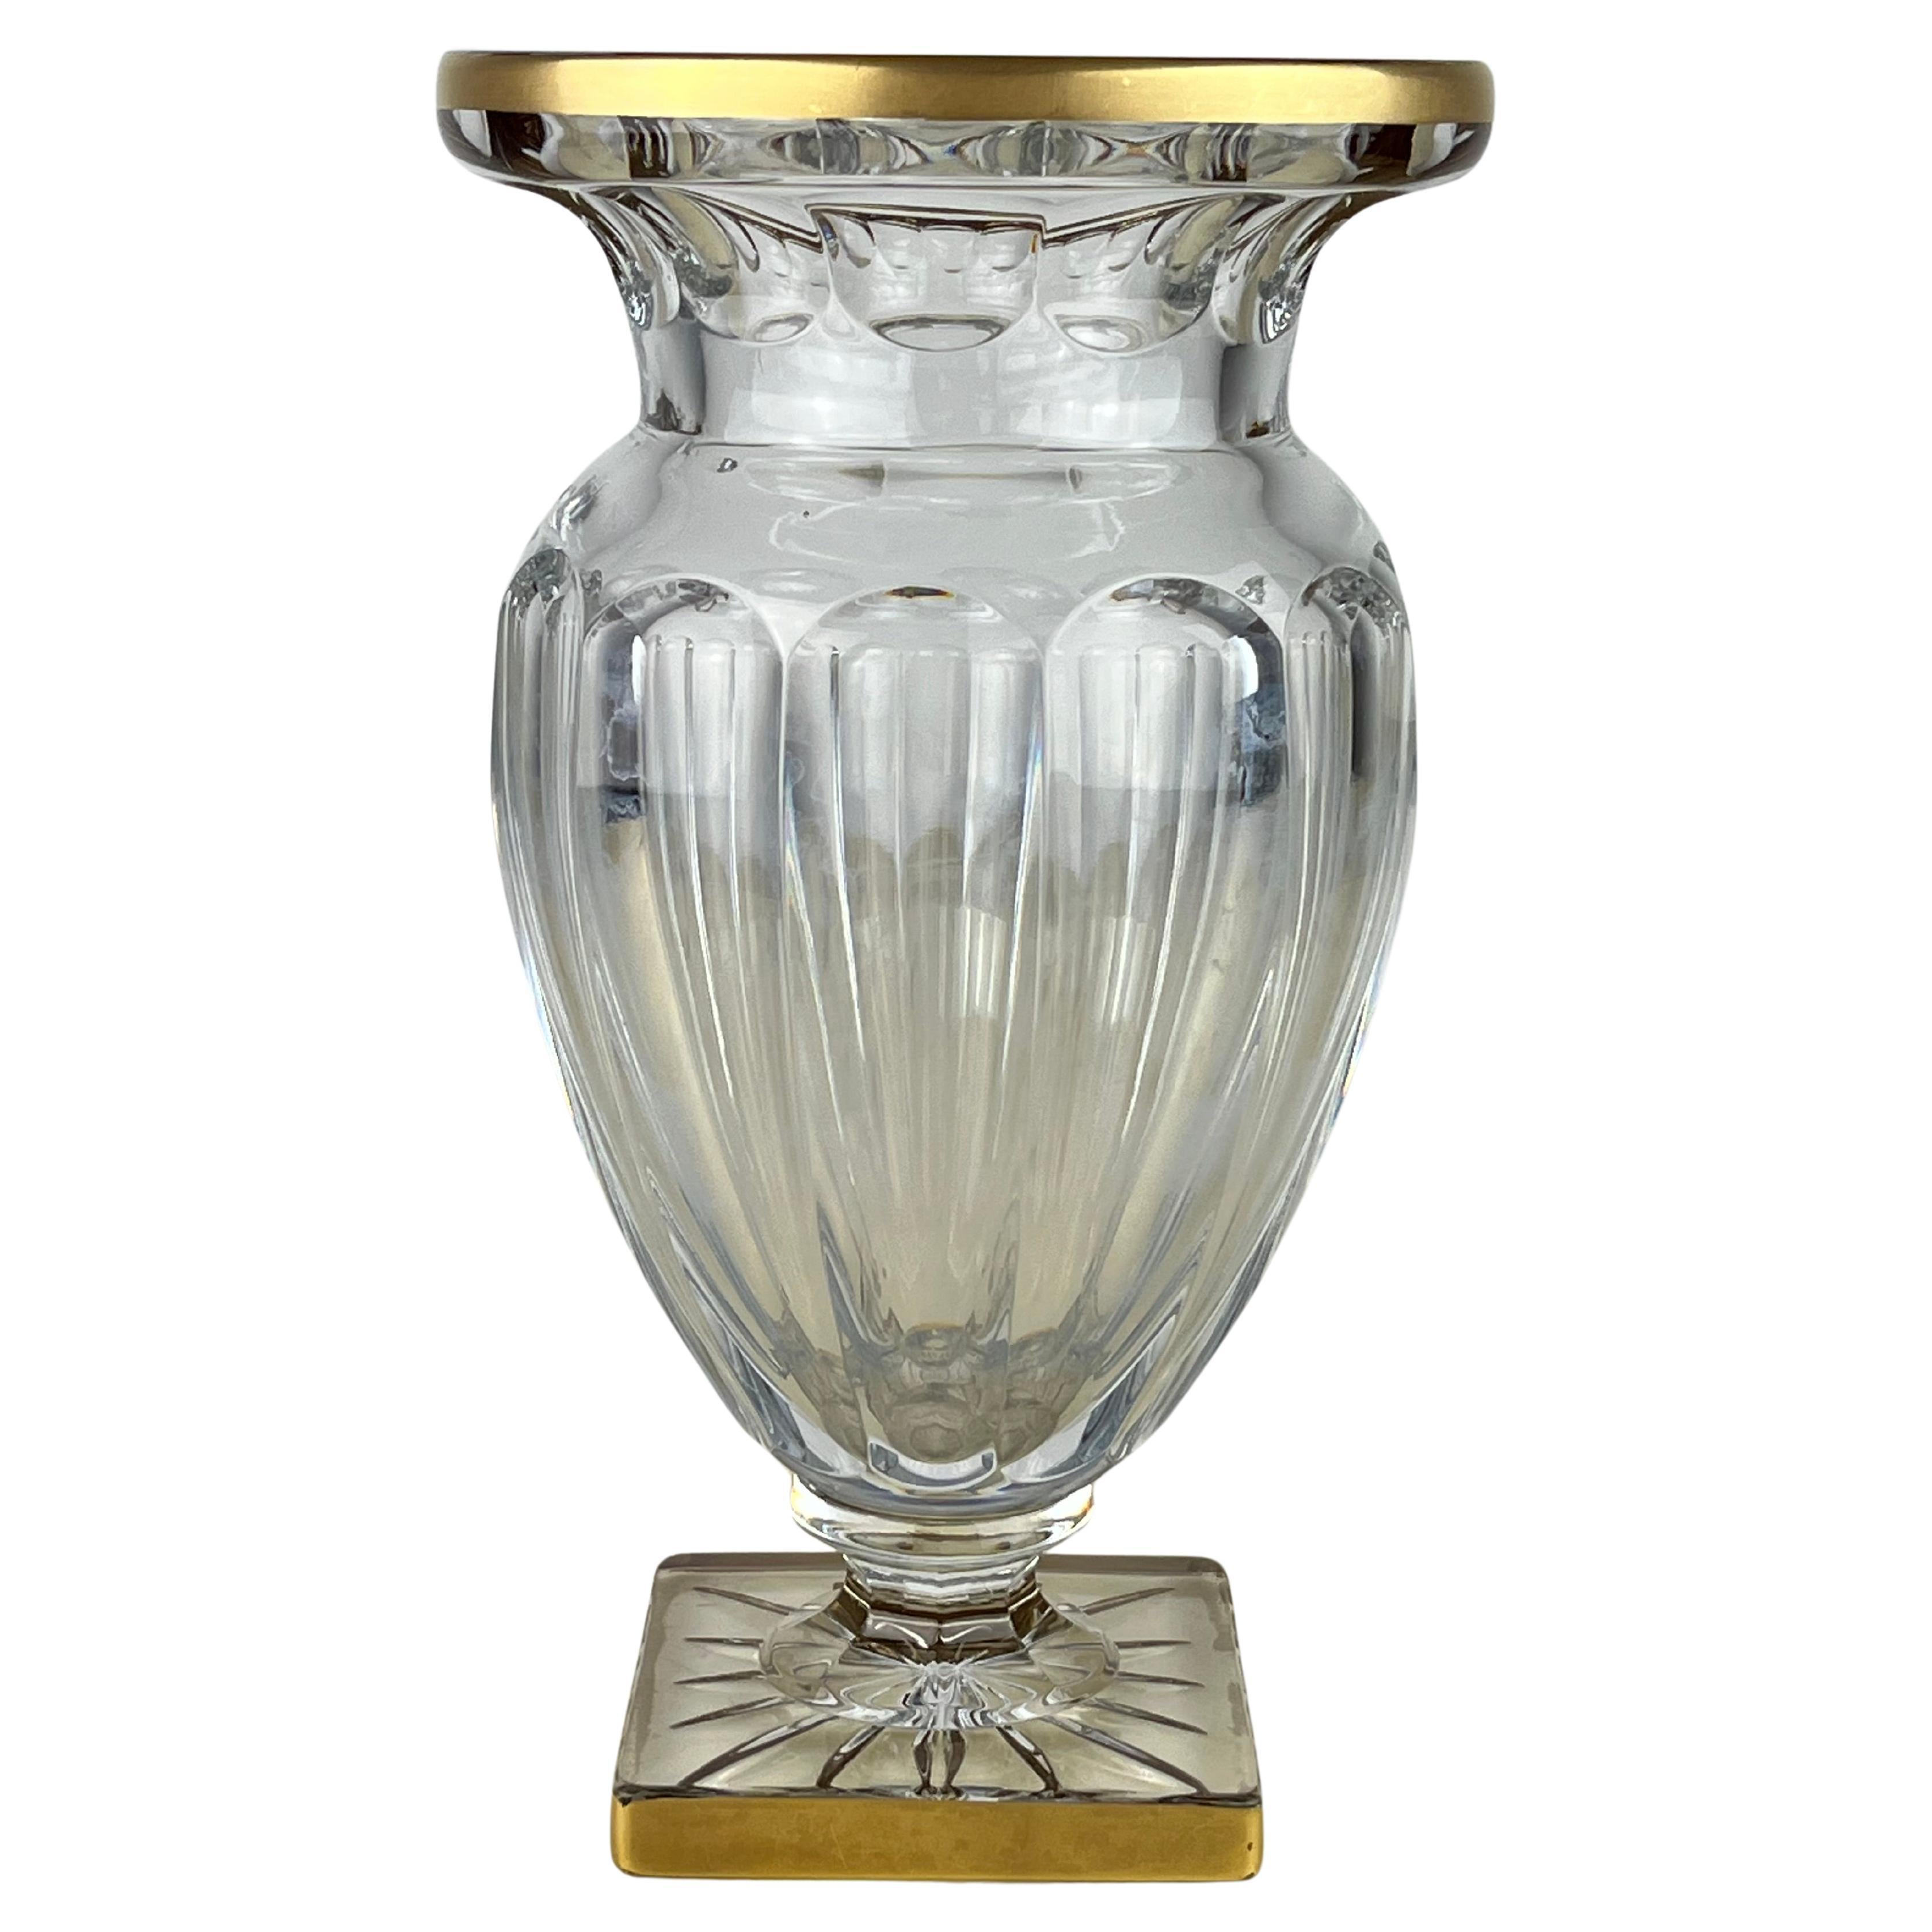 Leaded Glass Vases - 421 For Sale on 1stDibs